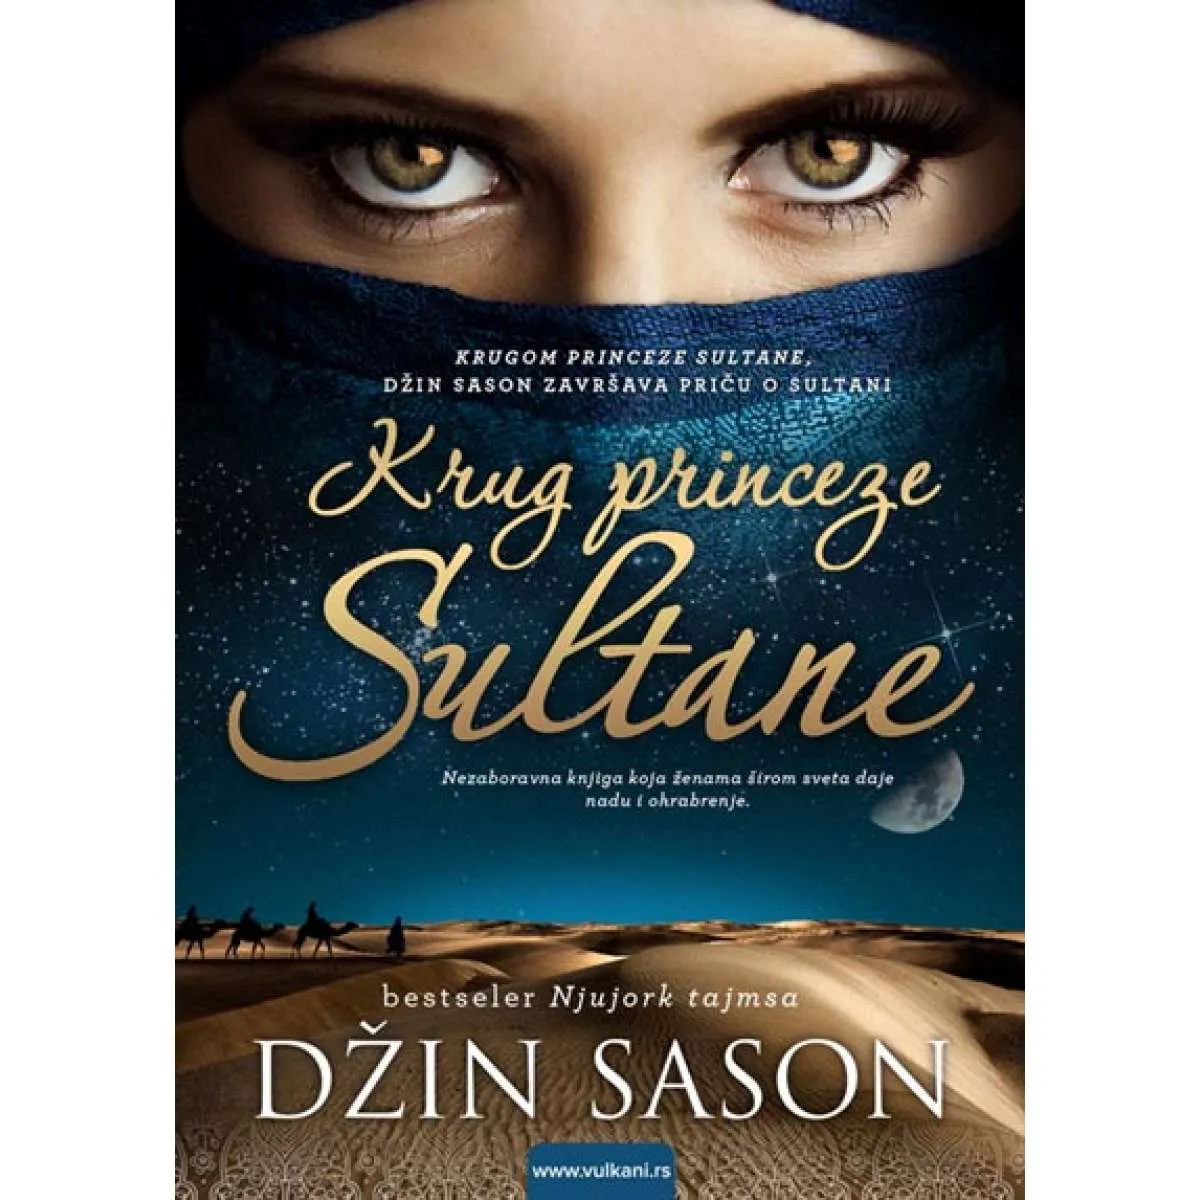 Krug princeze Sultane (V) 